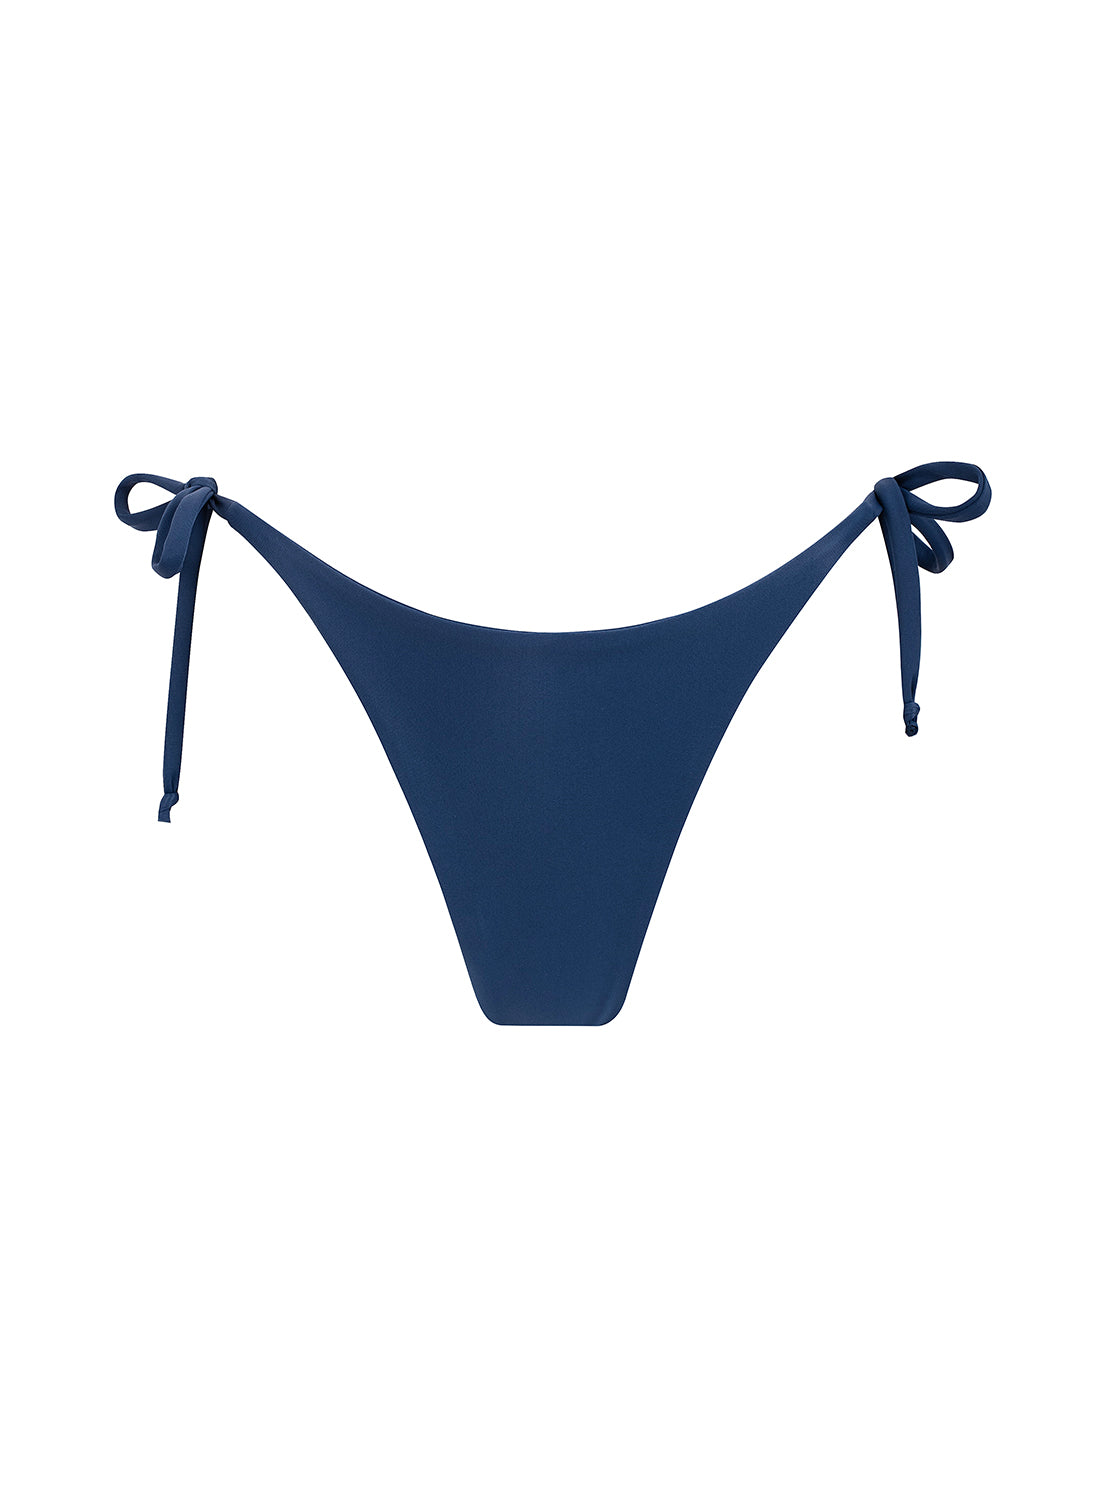 Nautica Women's Midrise Core Full Coverage Bikini Bottom Swimsuit,  Black/Blue, M price in UAE,  UAE